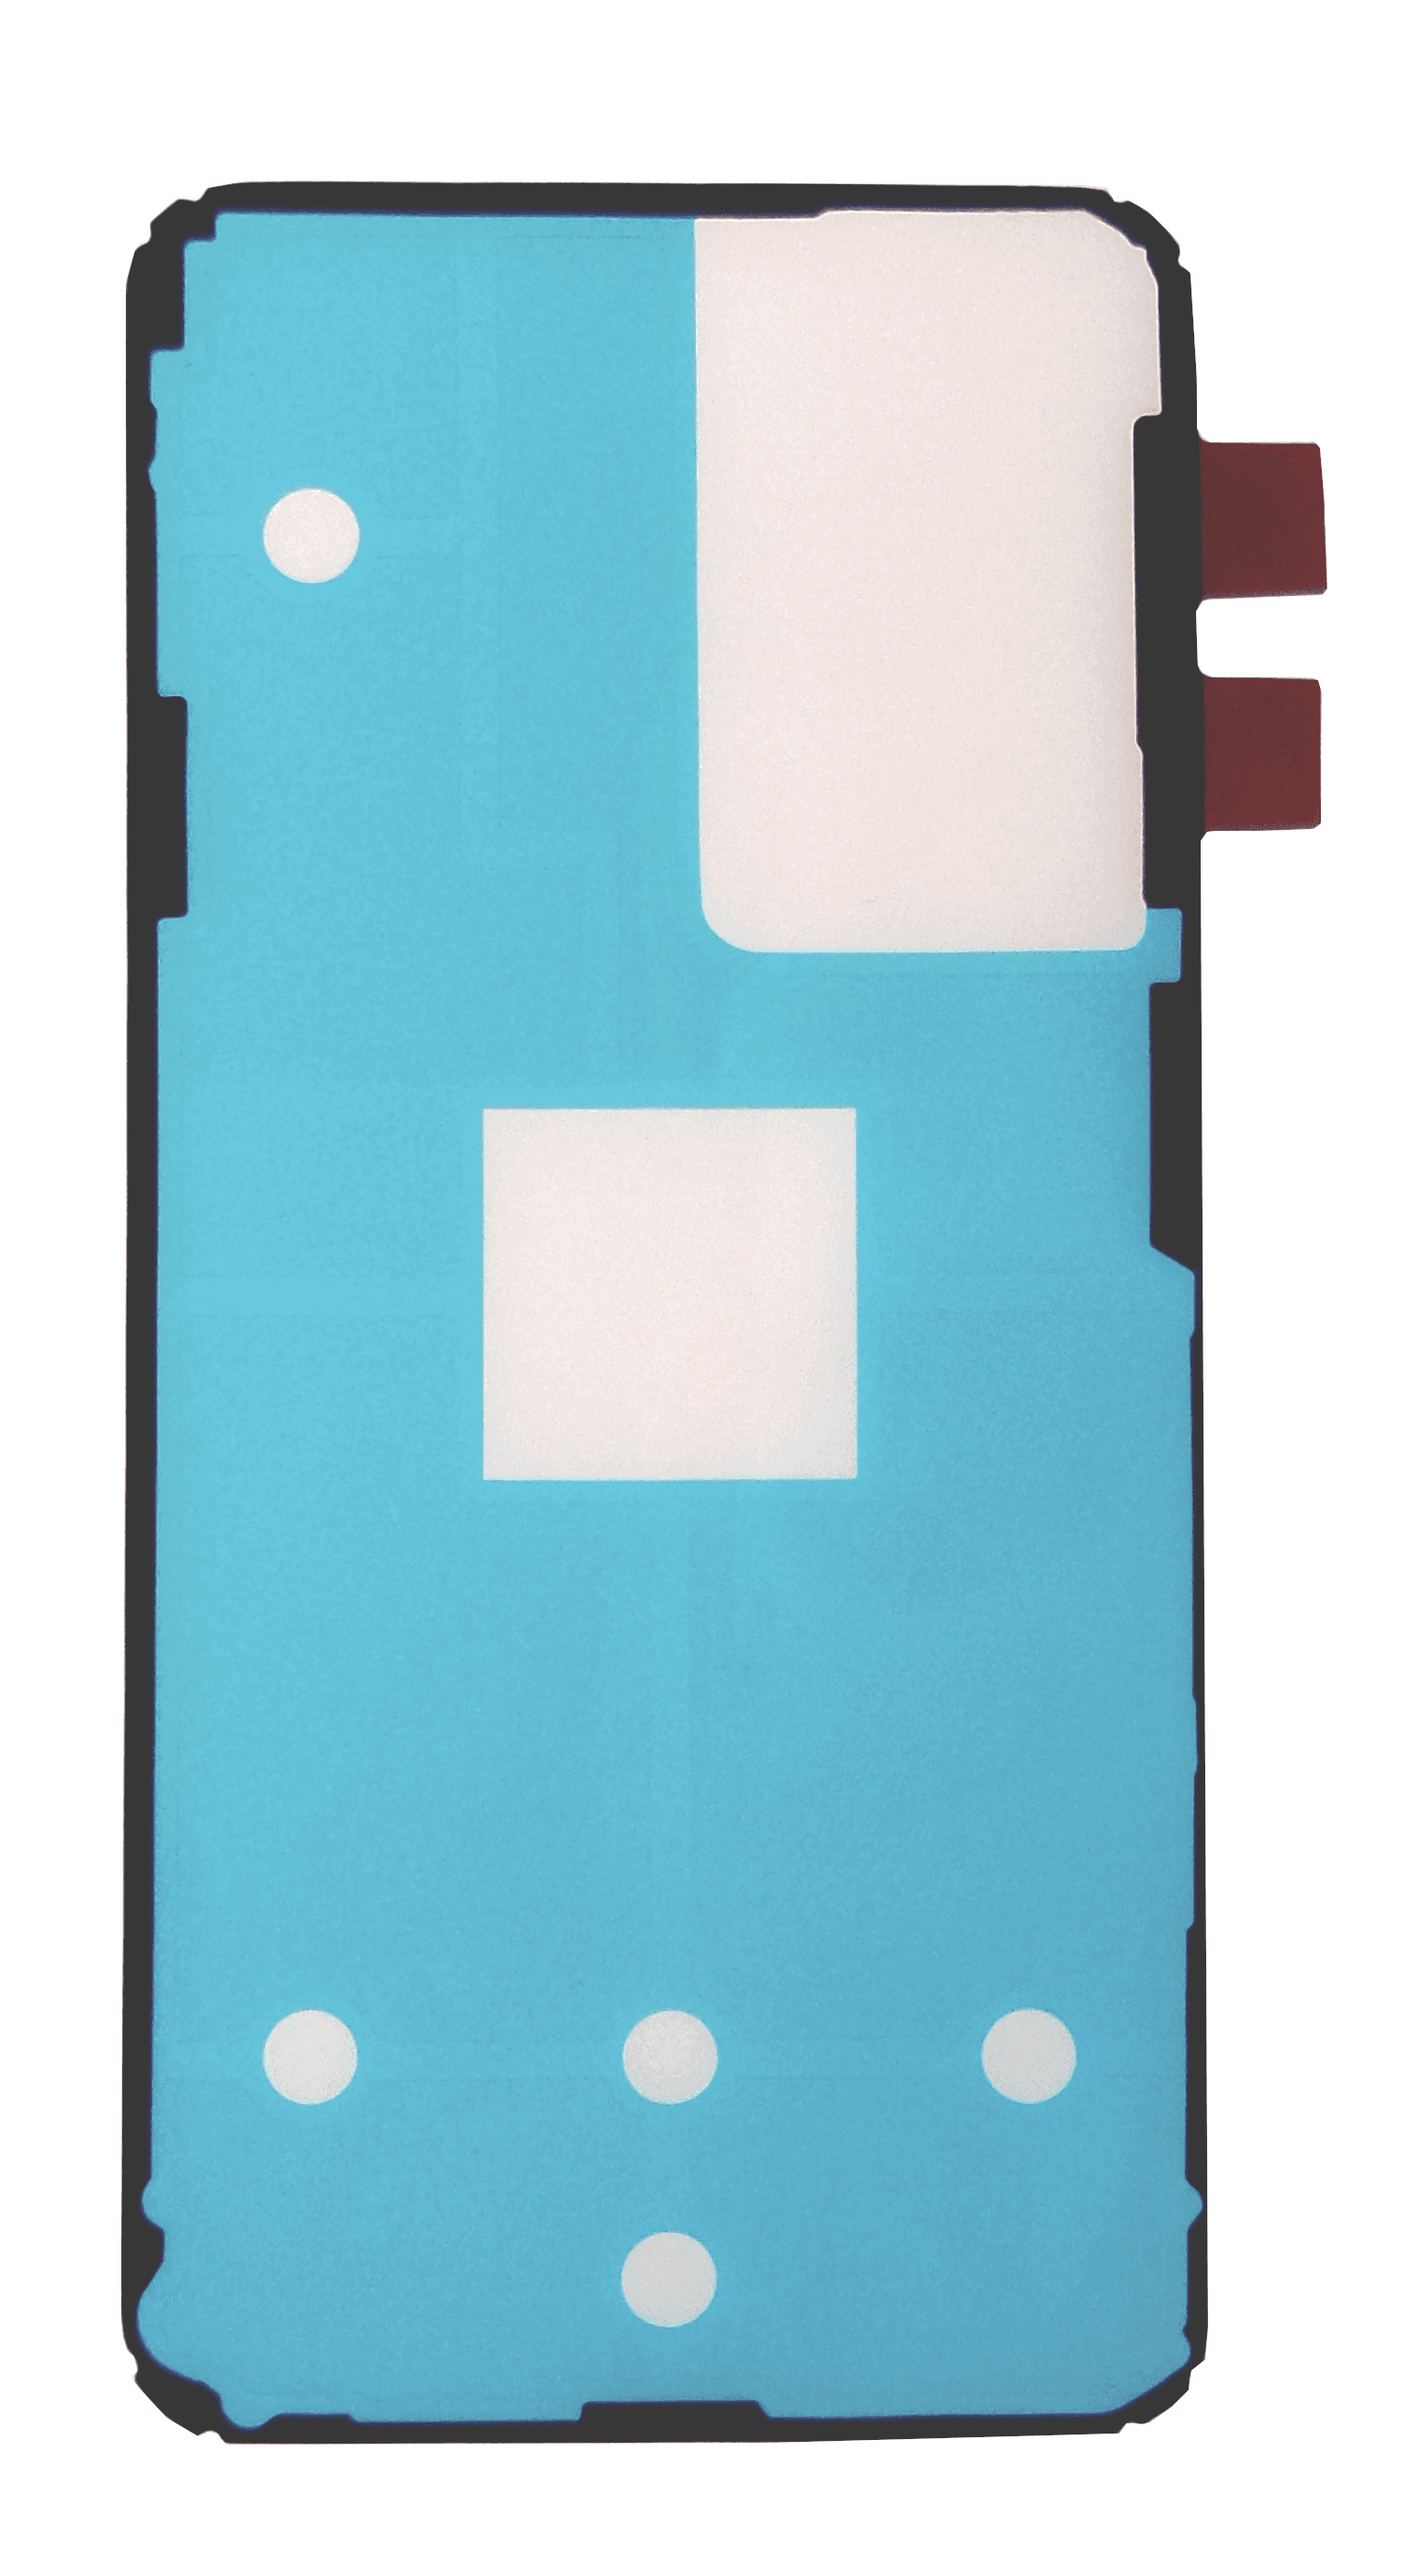 Montážní lepící páska krytu baterie Huawei P40